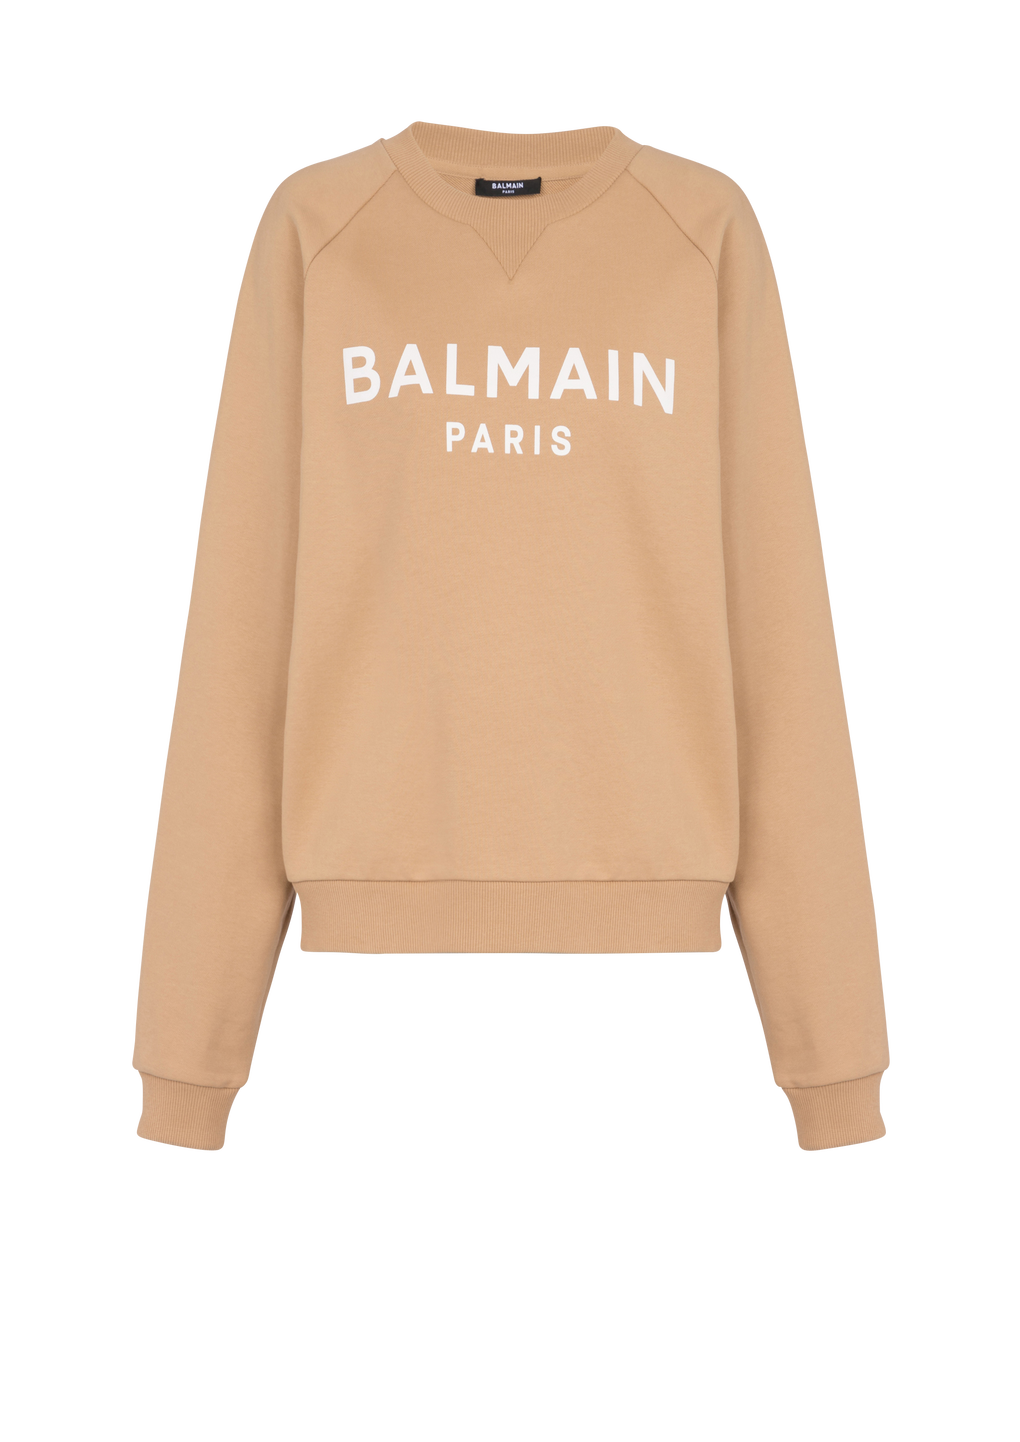 Cotton printed Balmain logo sweatshirt, brown, hi-res